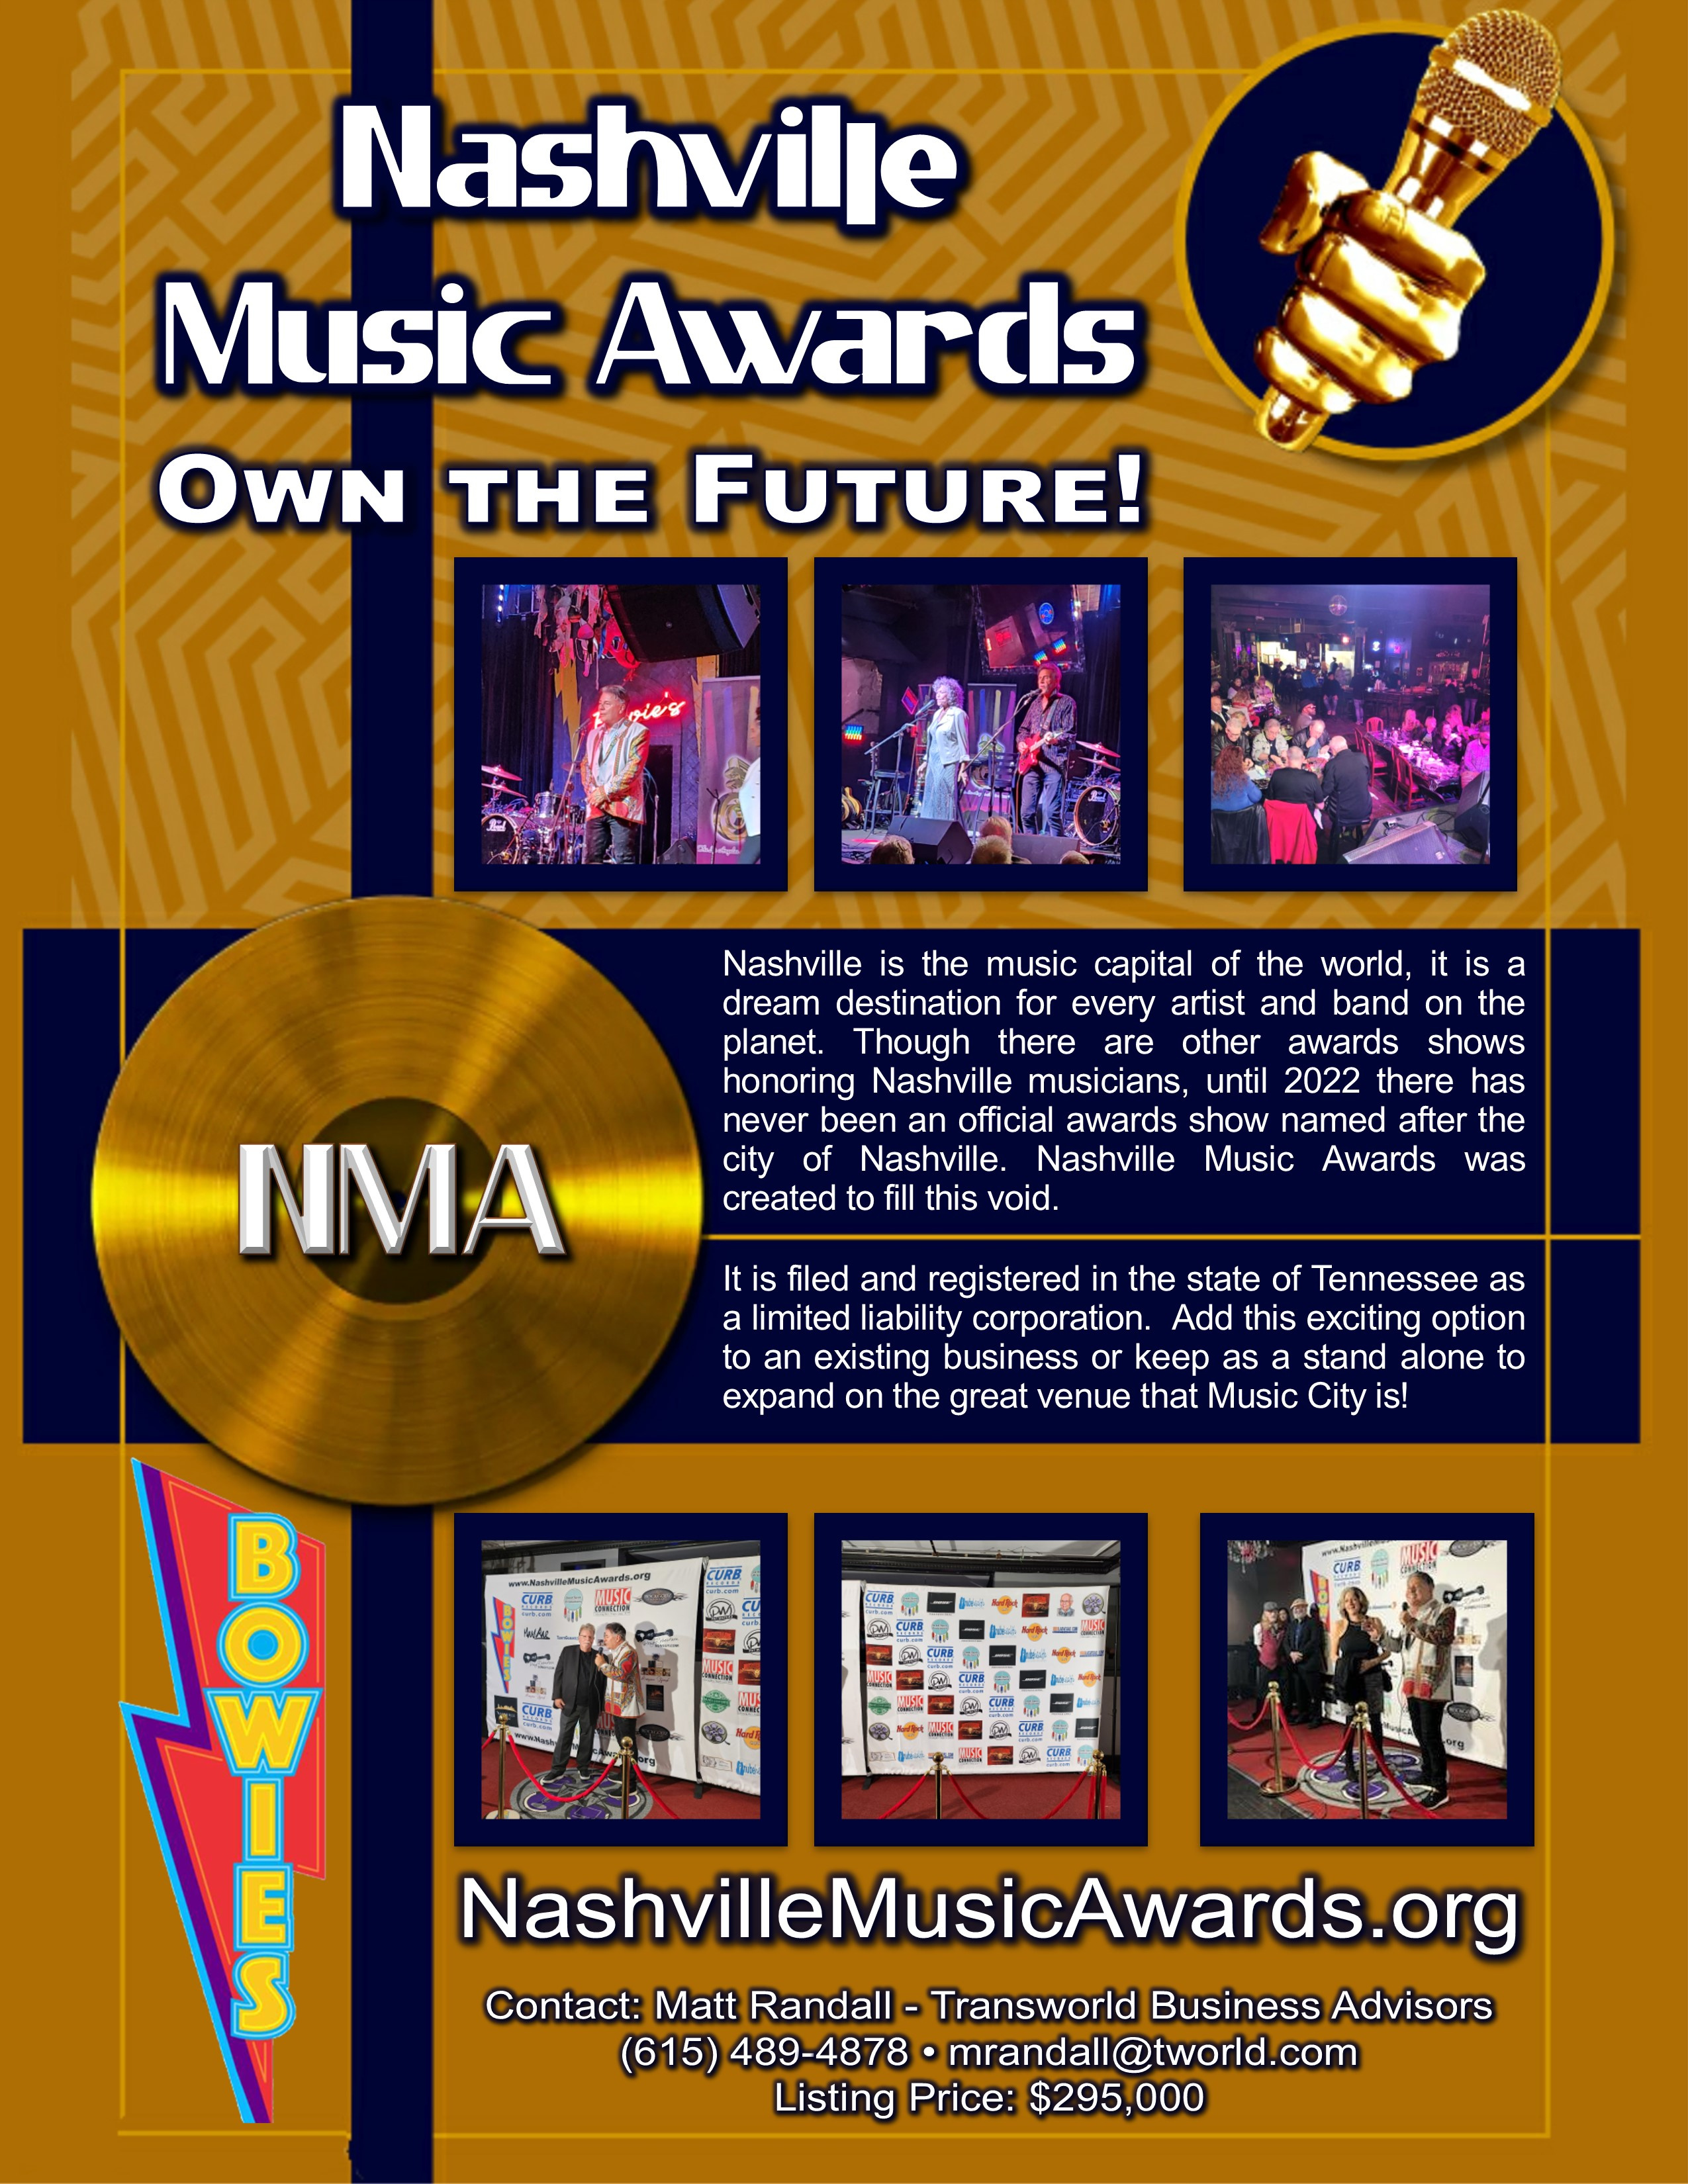 Nashville Music Awards. Own the Future!